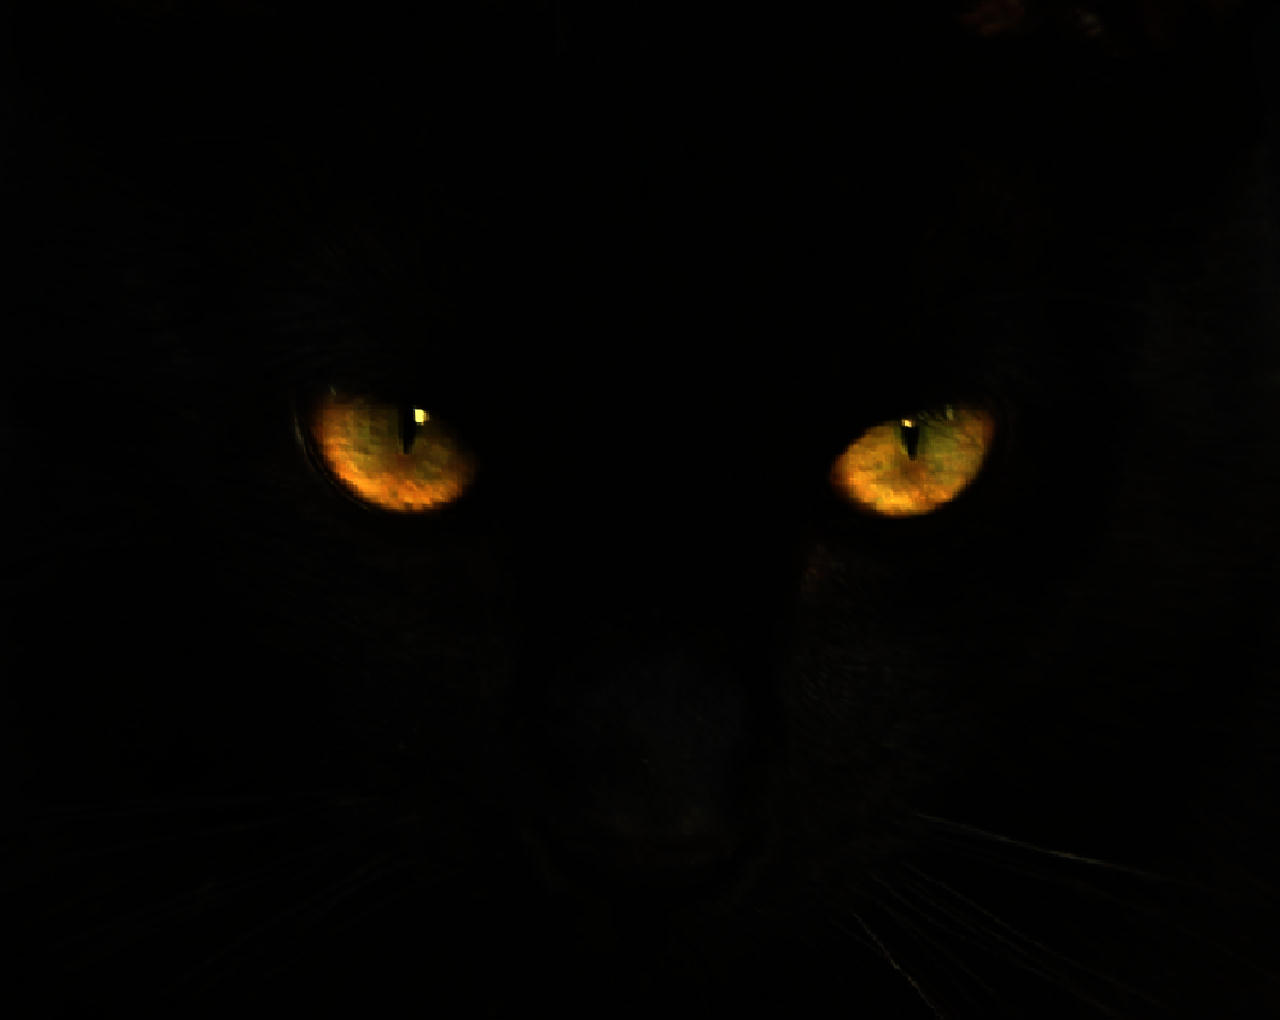 black cat eyes illuminating in darkness